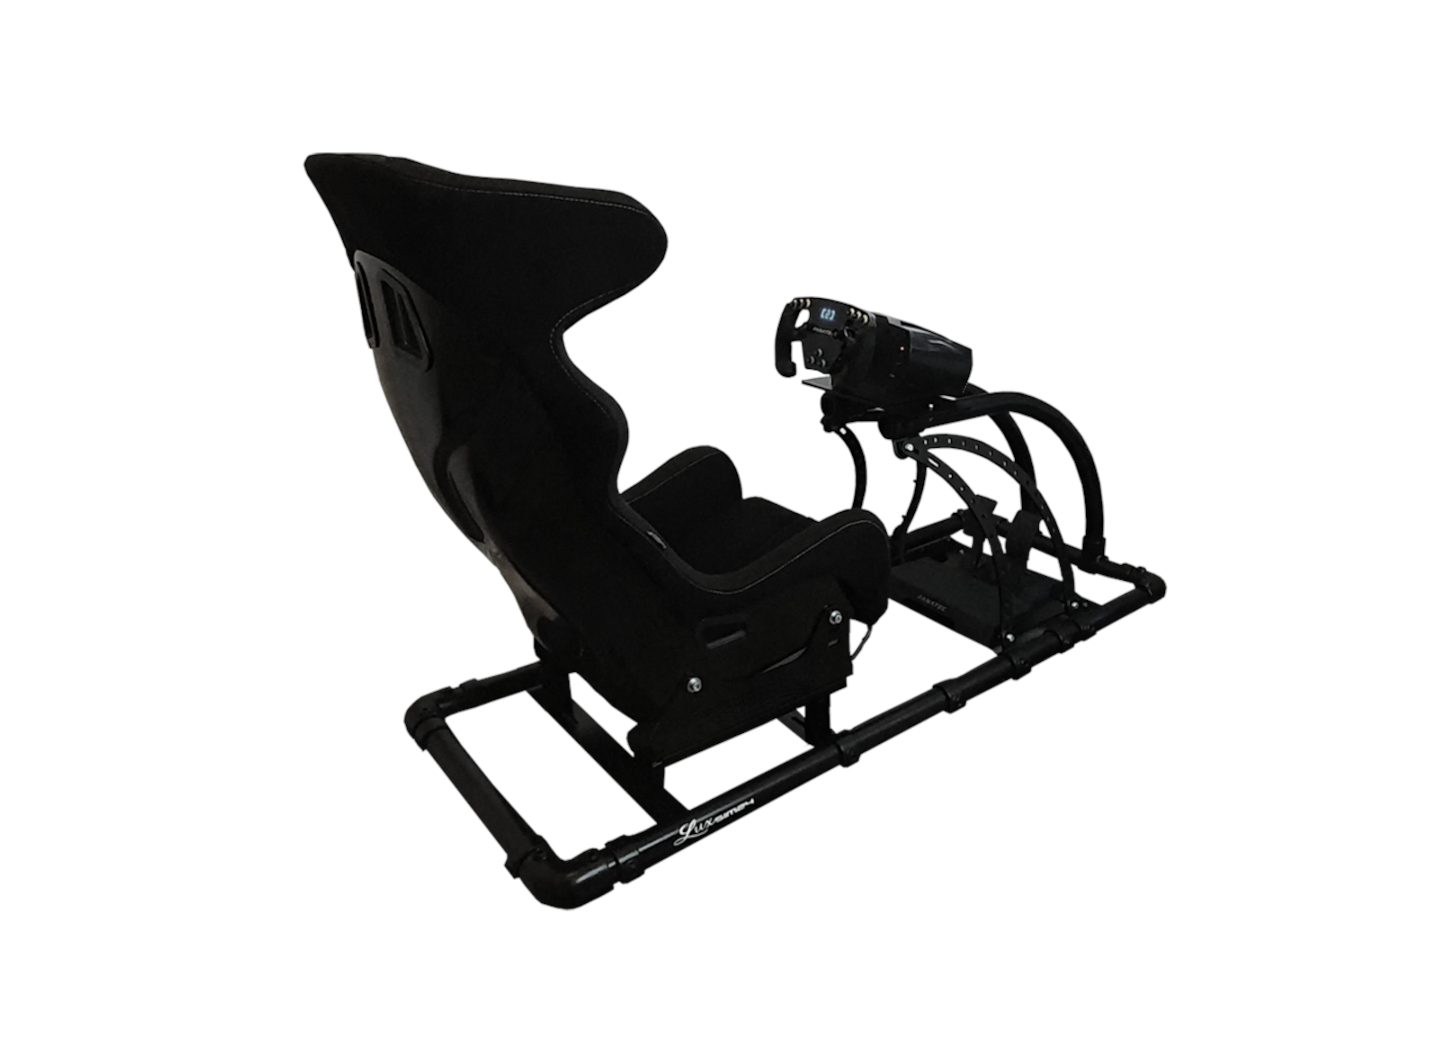 Luxsim24 AM Racing Simulator